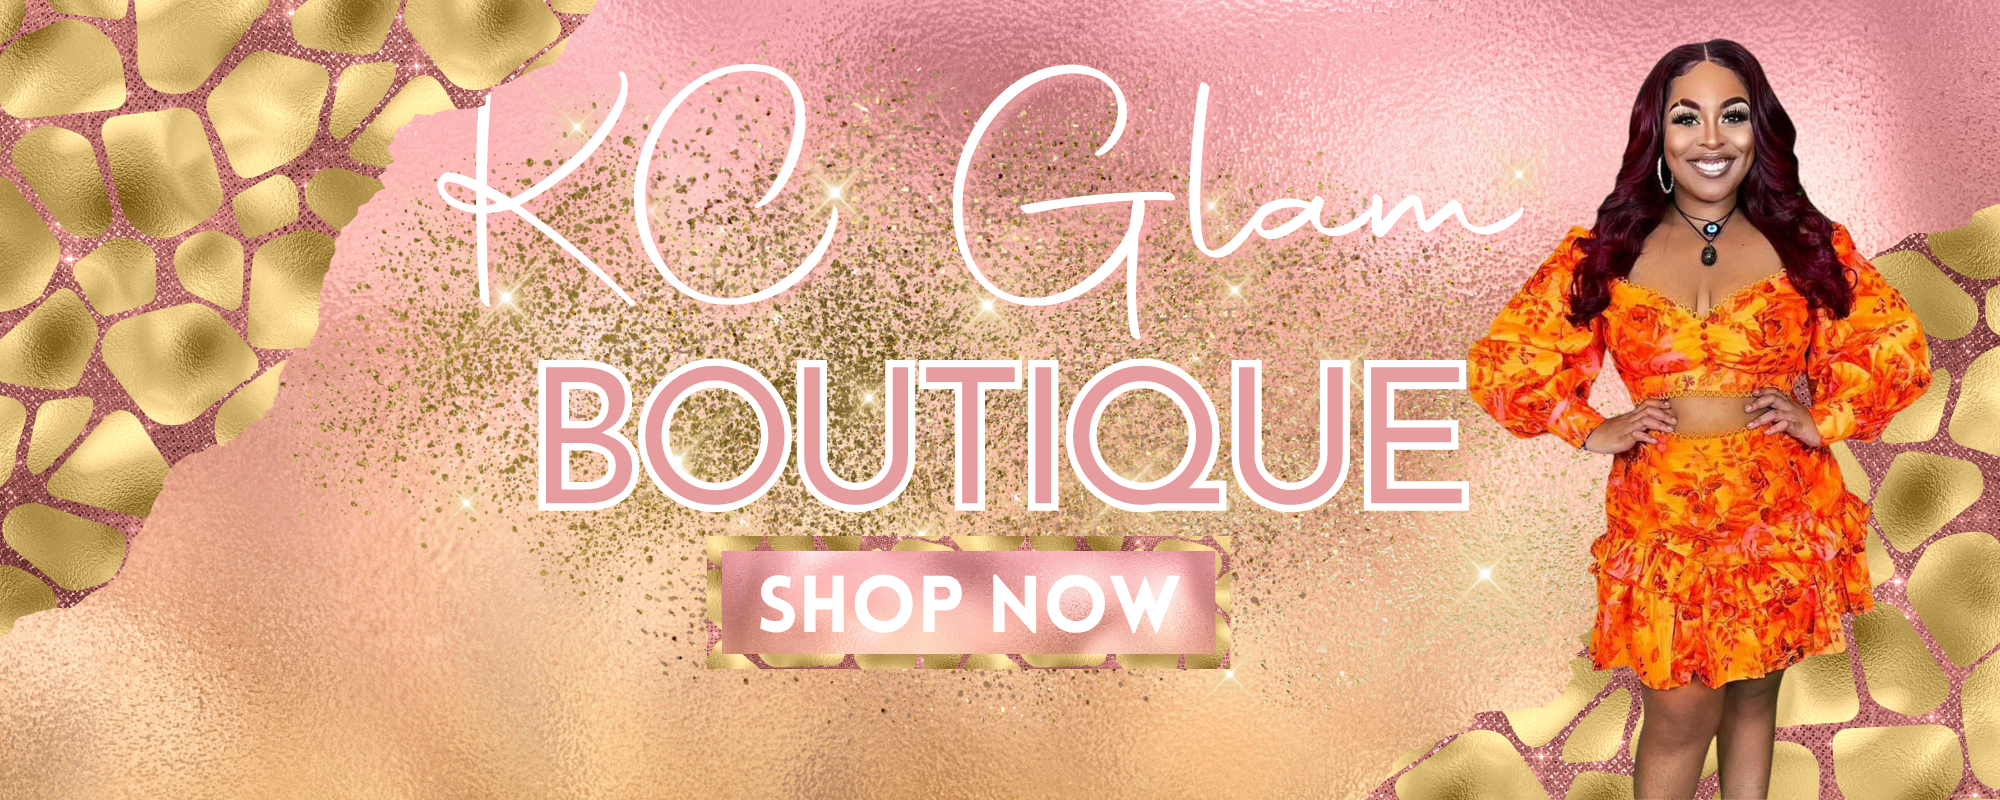 Glam Boutique, LLC